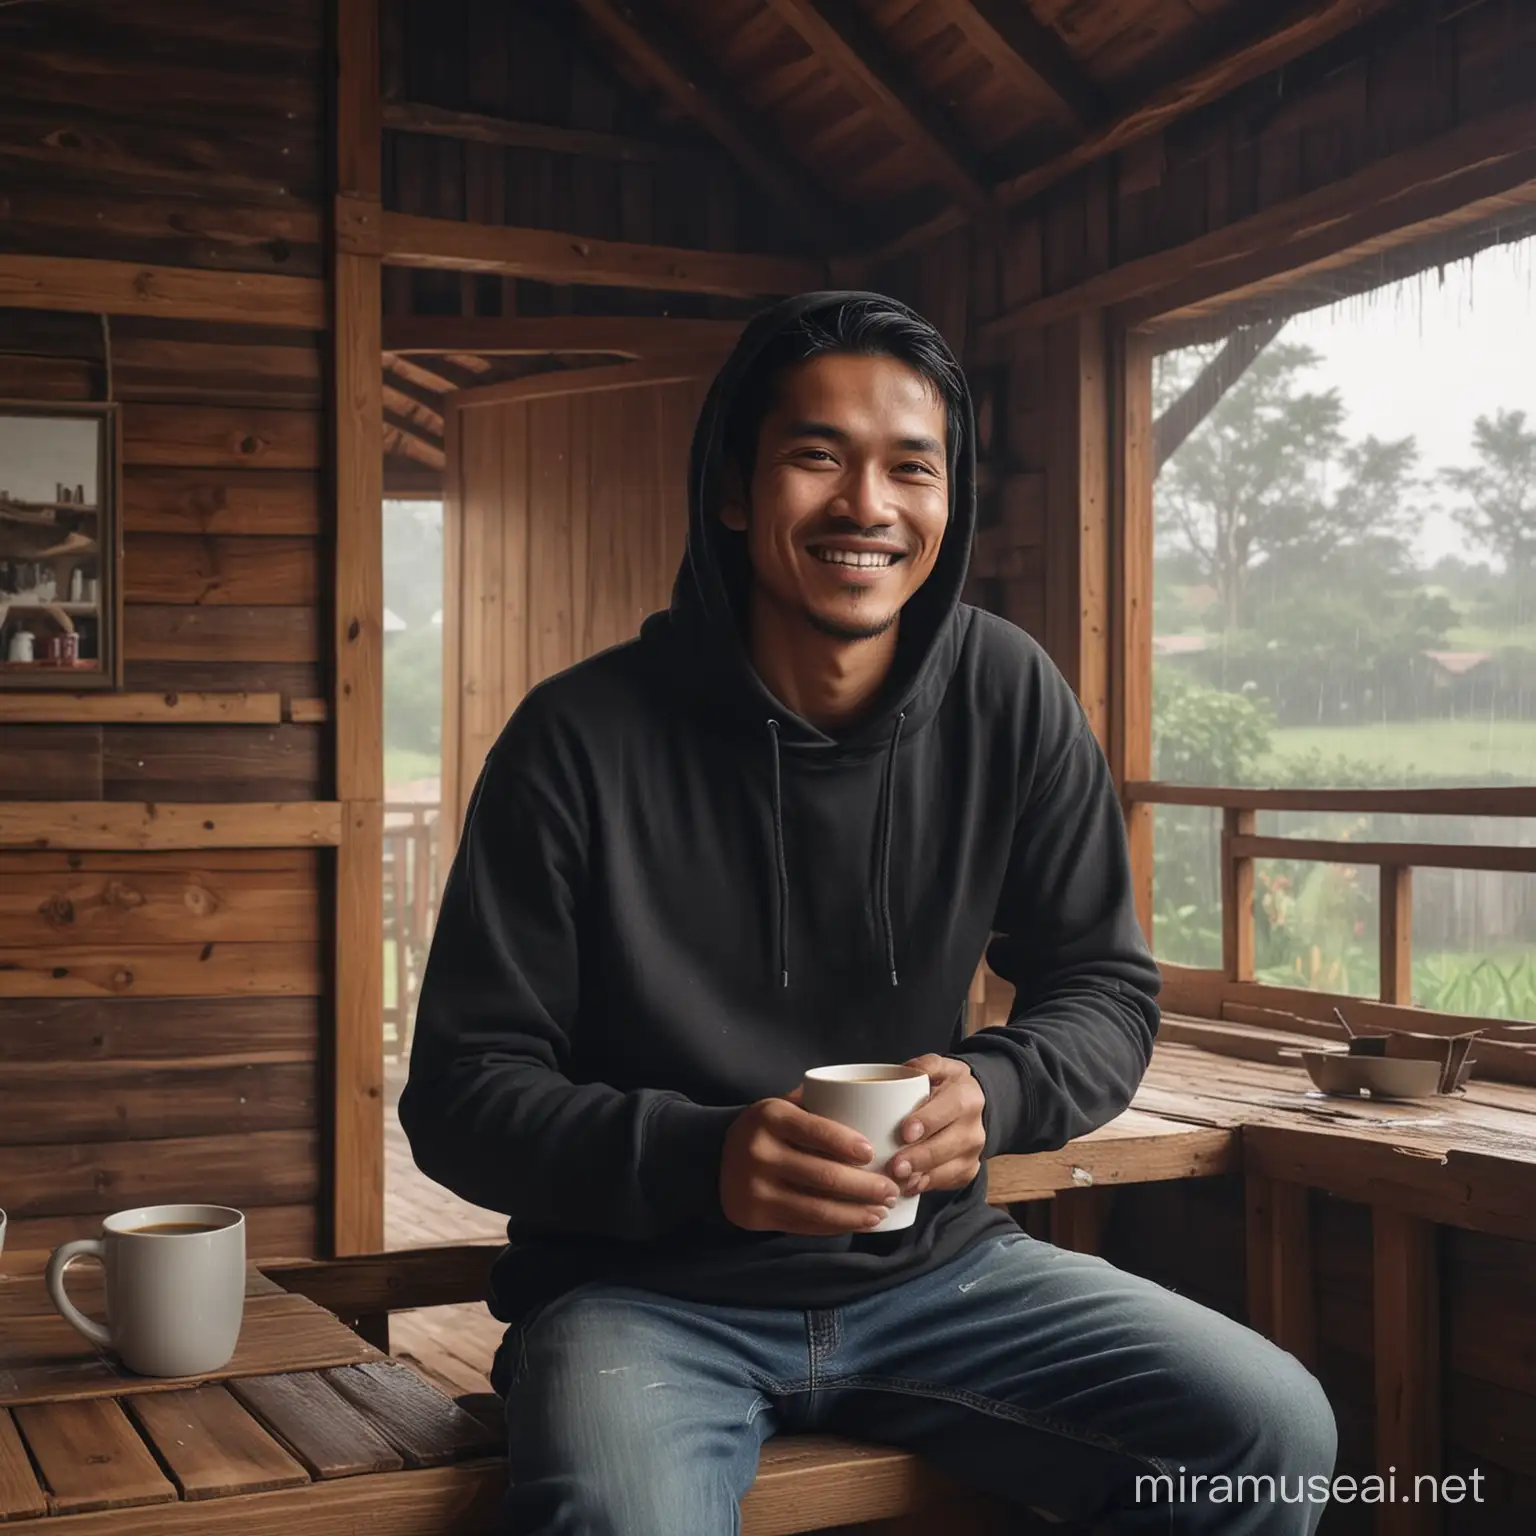 pria indonesia memakai hoodie hitam dan celana jeans sedang duduk di dalam rumah kayu dengan wajah tersenyum sambil menikmati secangkir kopi di rumah kayu khas pedesaan, suasana pagi hari yang hujan, realistic, UHD, 4K